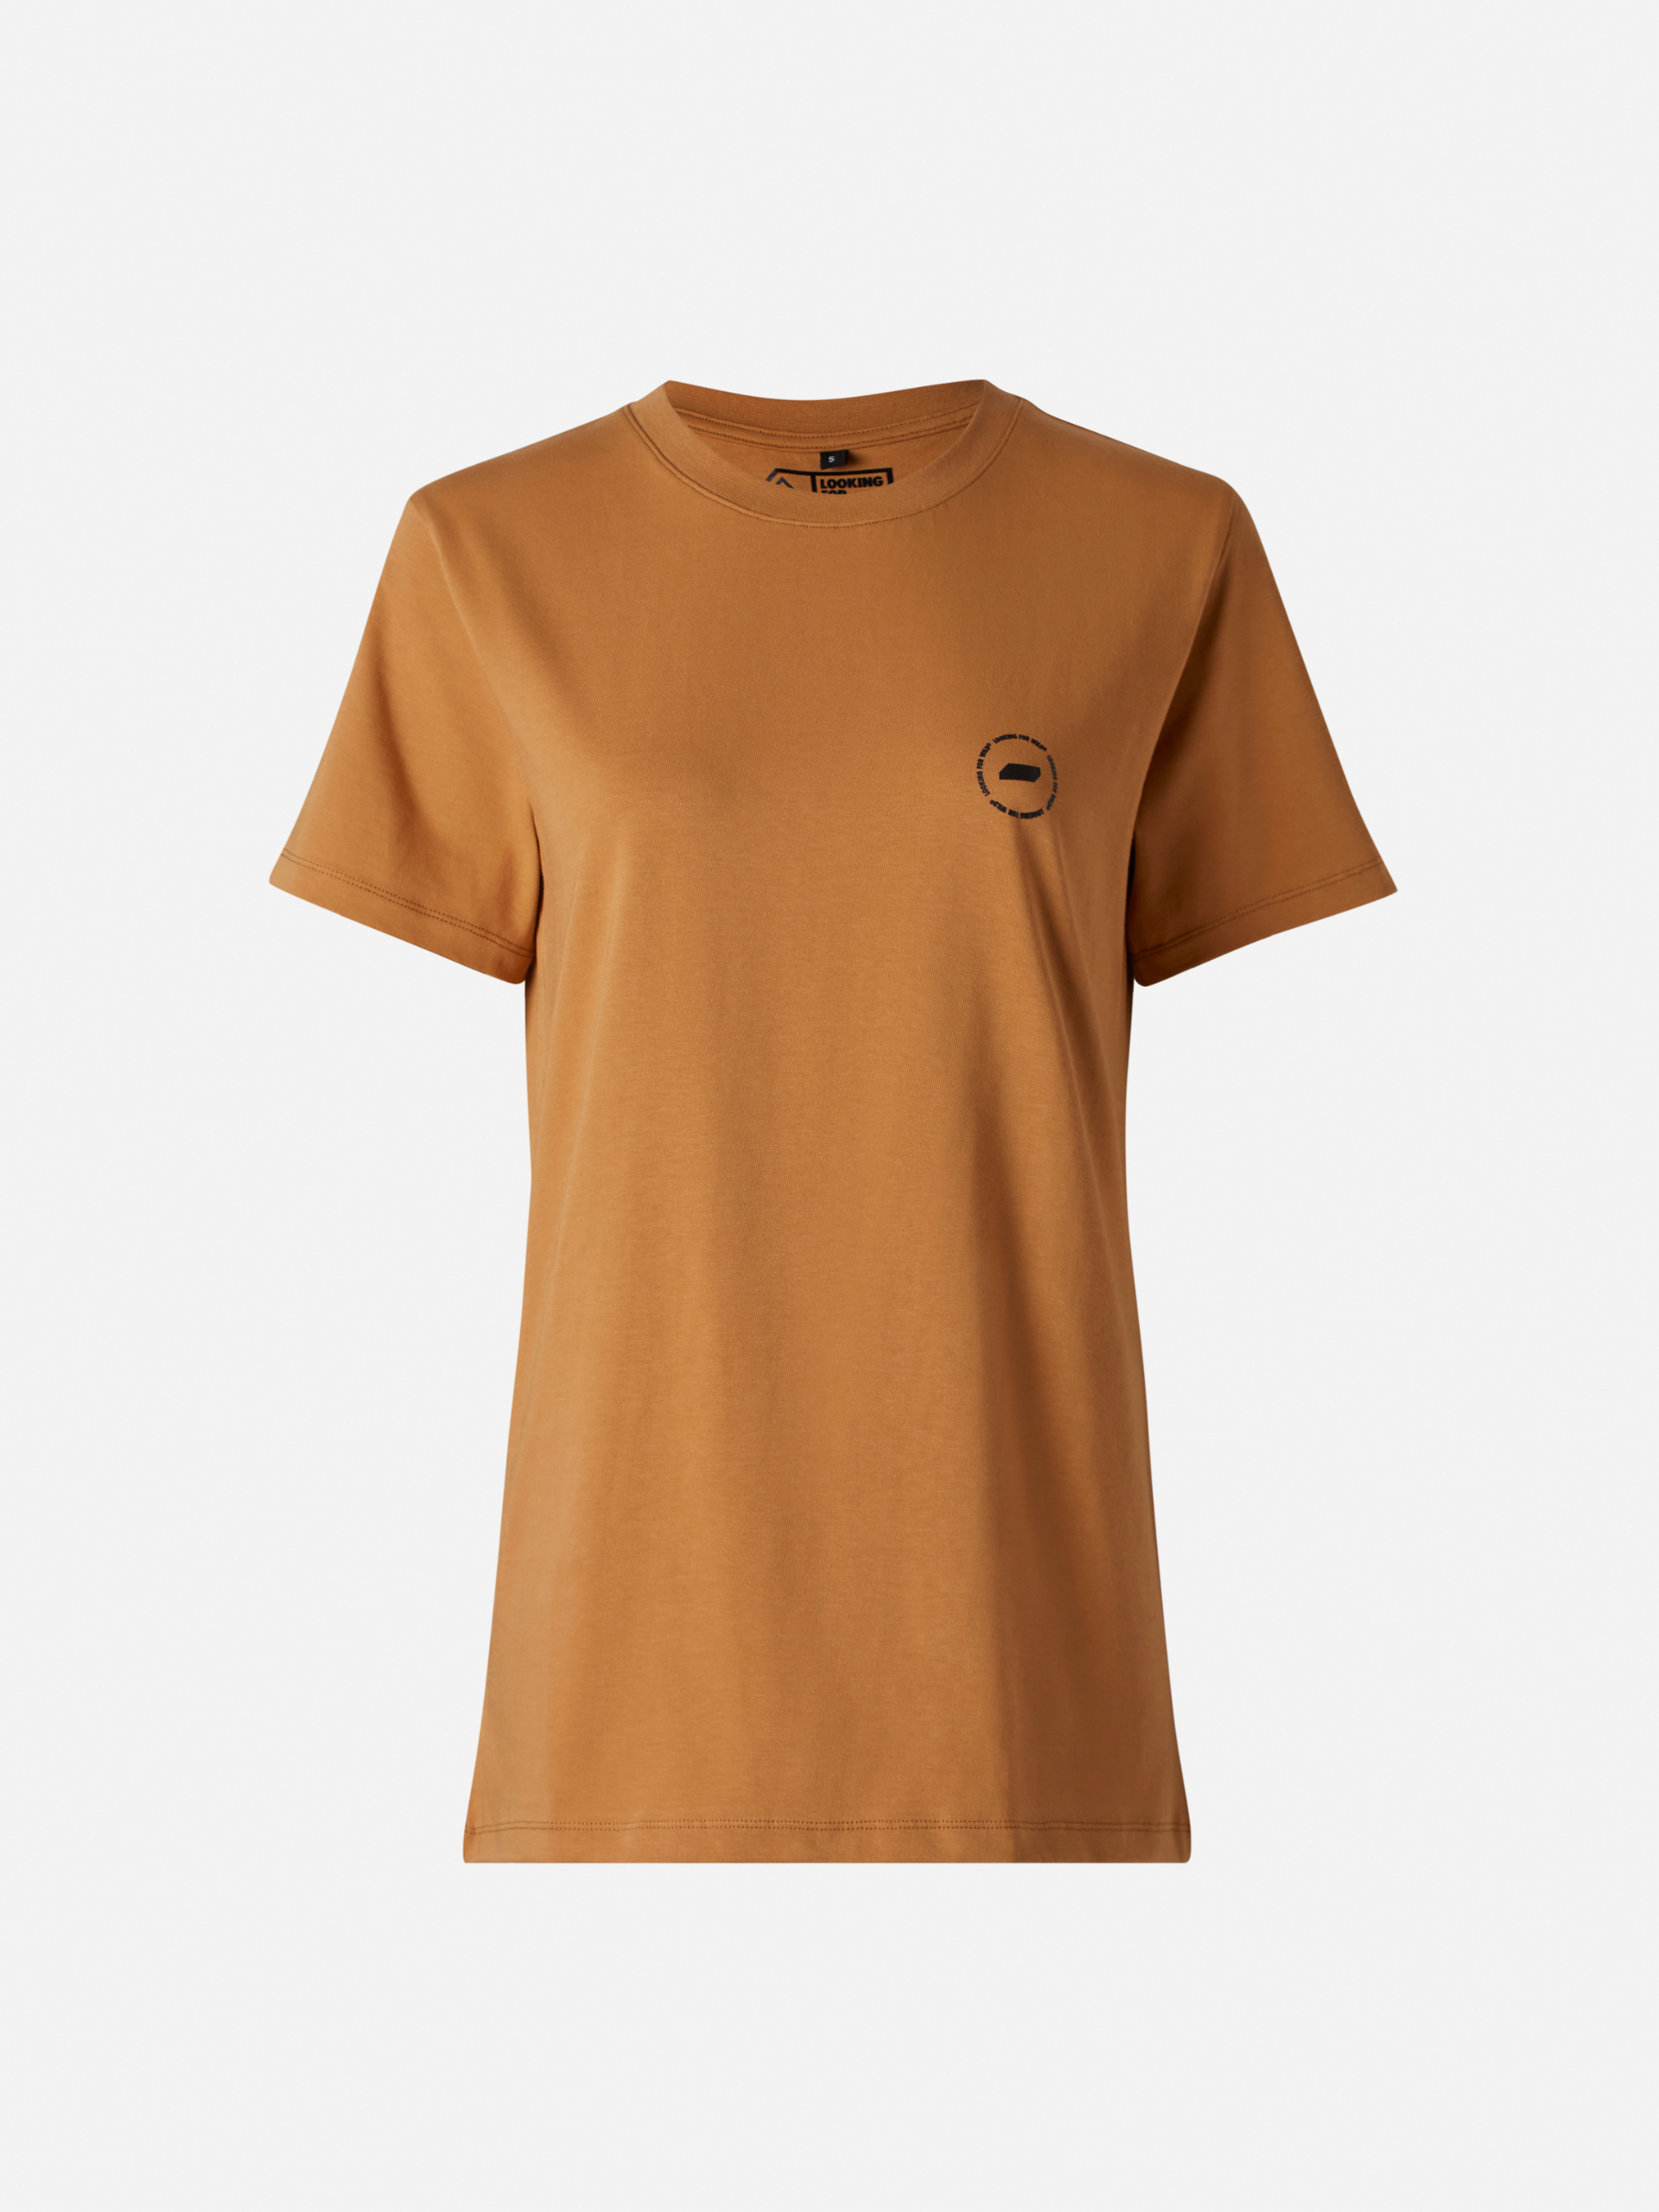 Monolith Brown Sugar unisex t-shirt